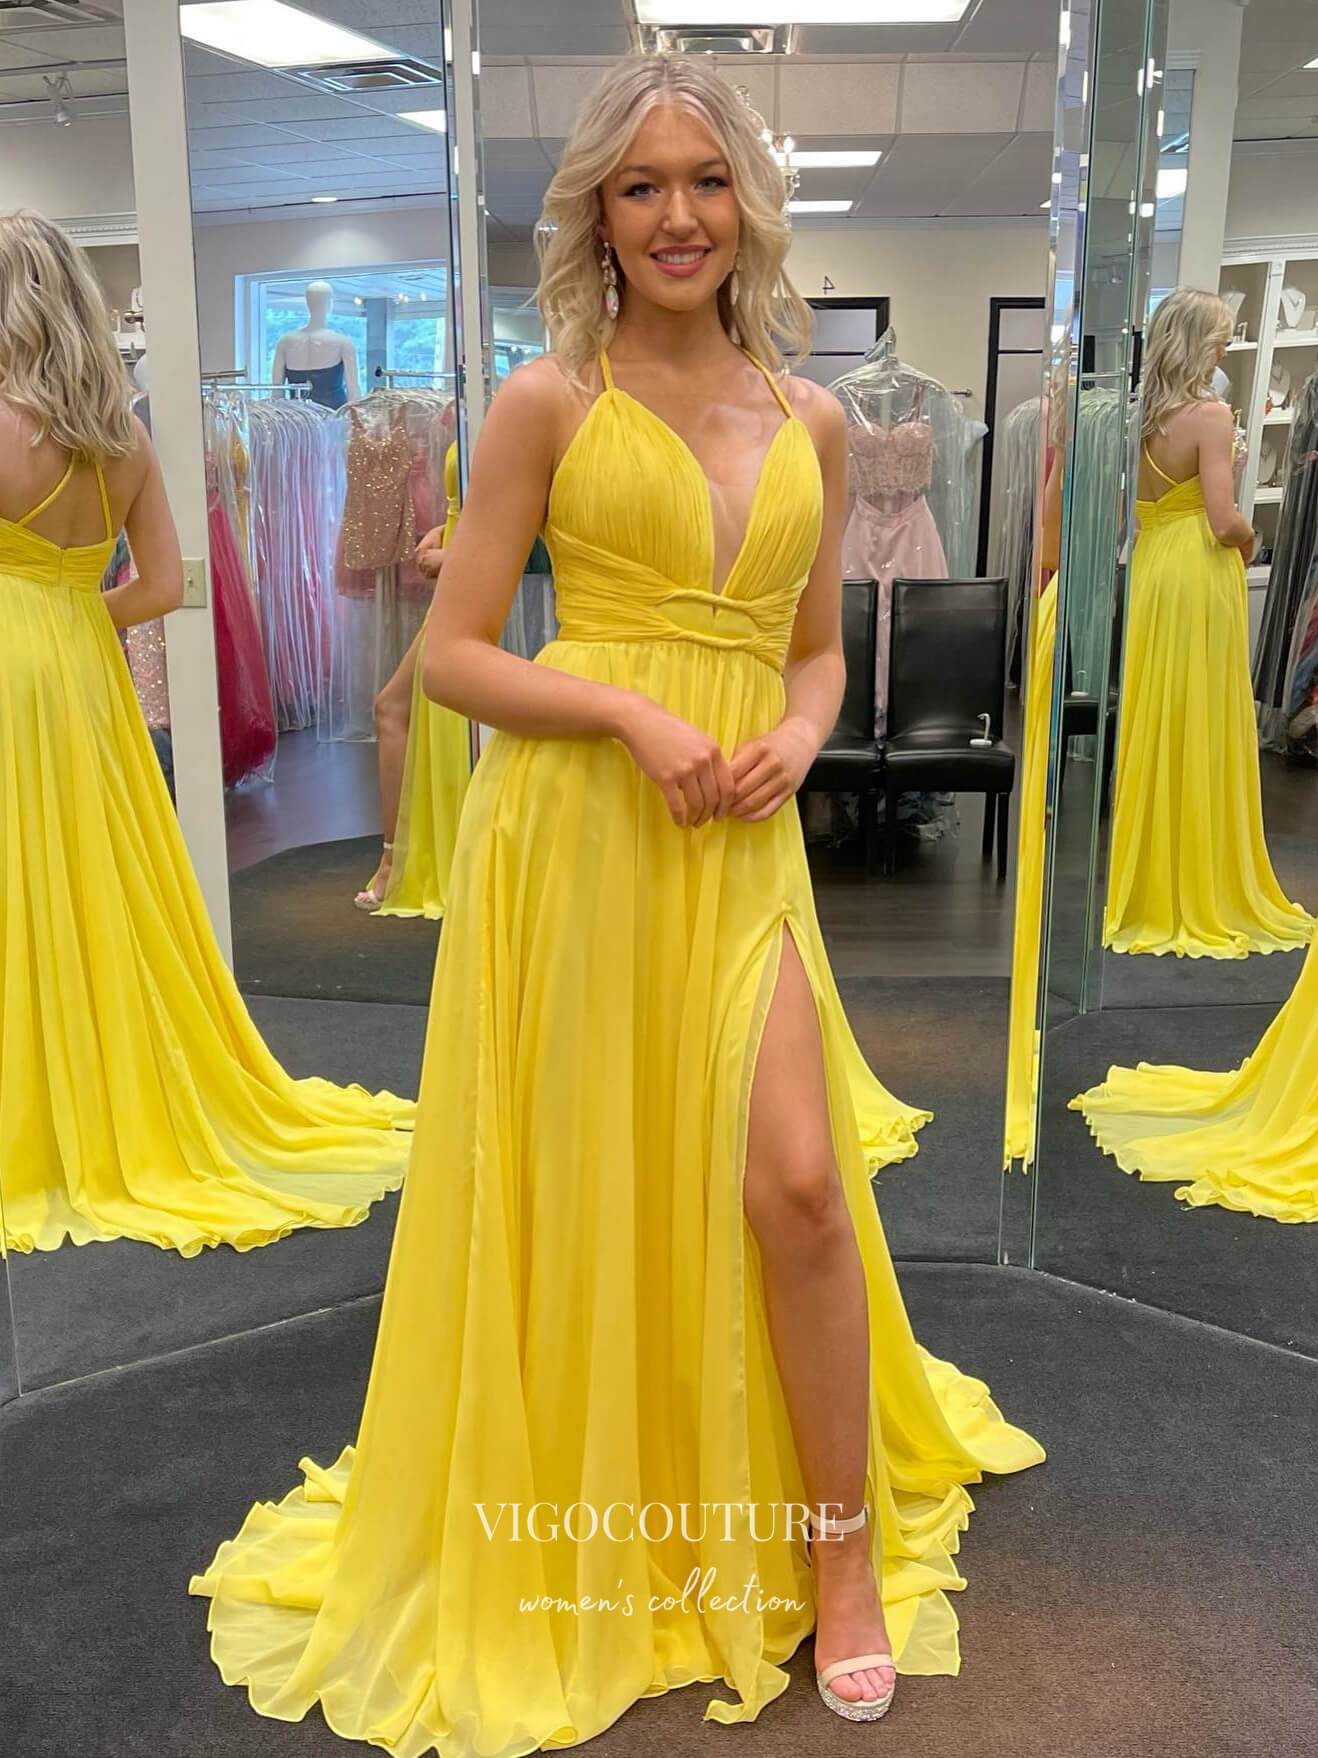 vigocouture-Chiffon Spaghetti Strap Prom Dresses A-Line Formal Dresses 21563-Prom Dresses-vigocouture-Yellow-US2-